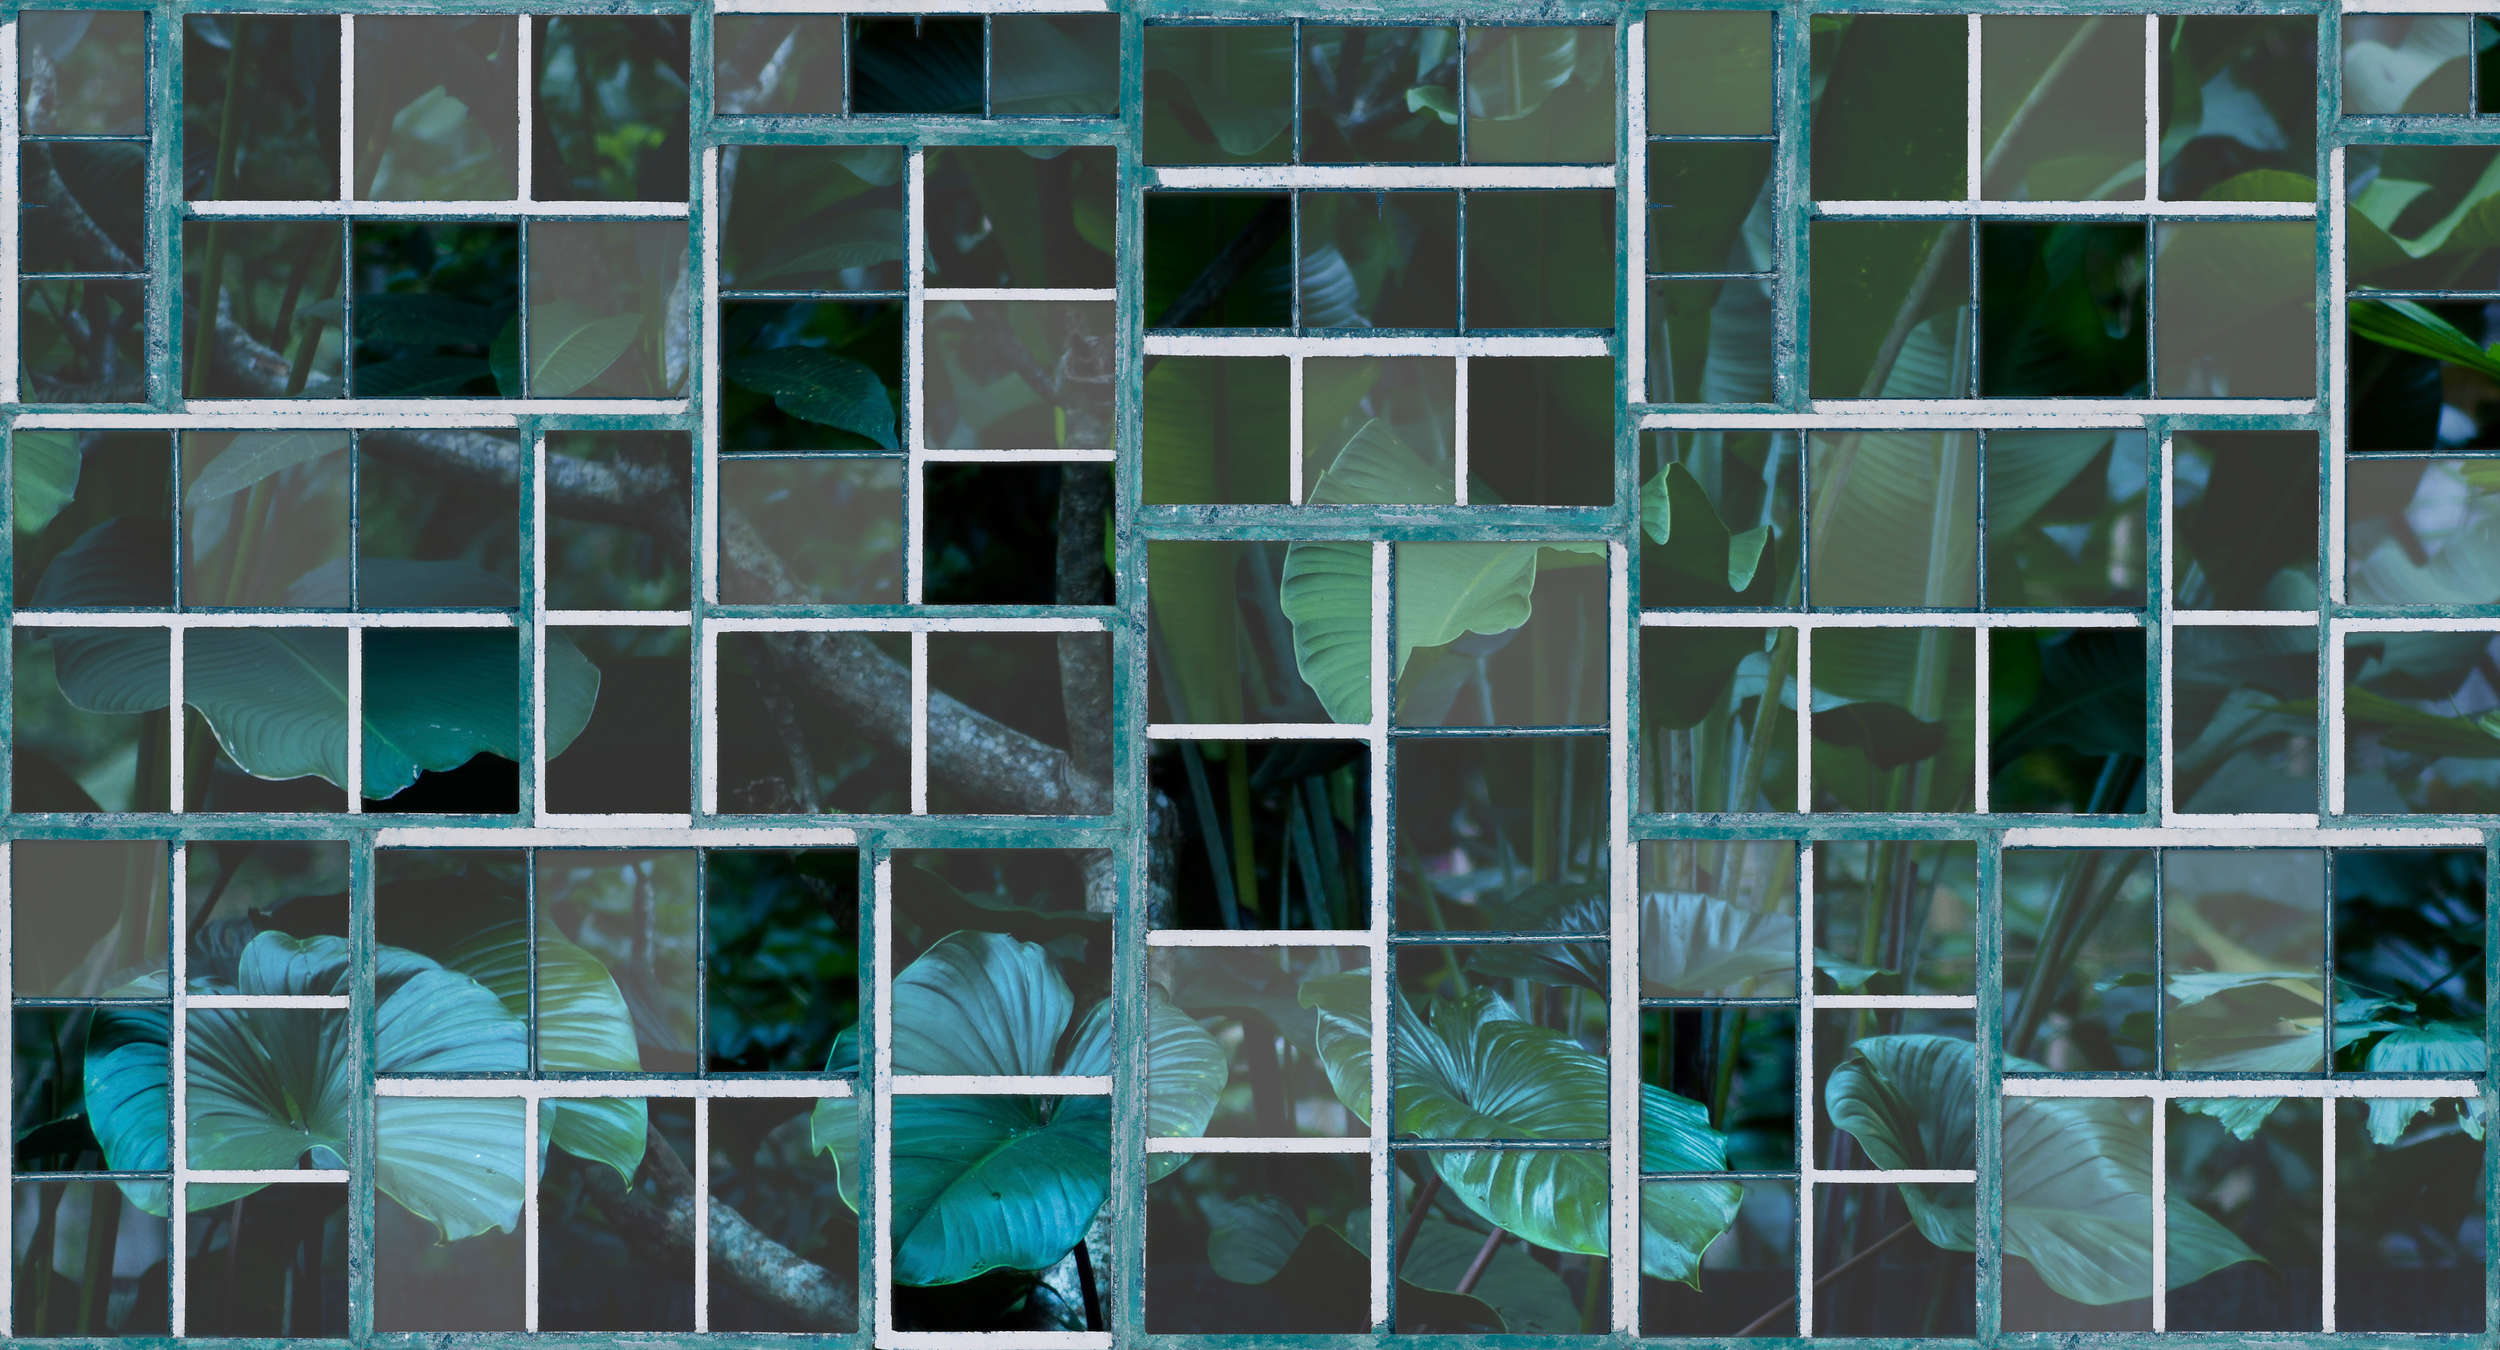             Mural de pared Ventana retro con vista al bosque - Azul, Verde, Blanco
        